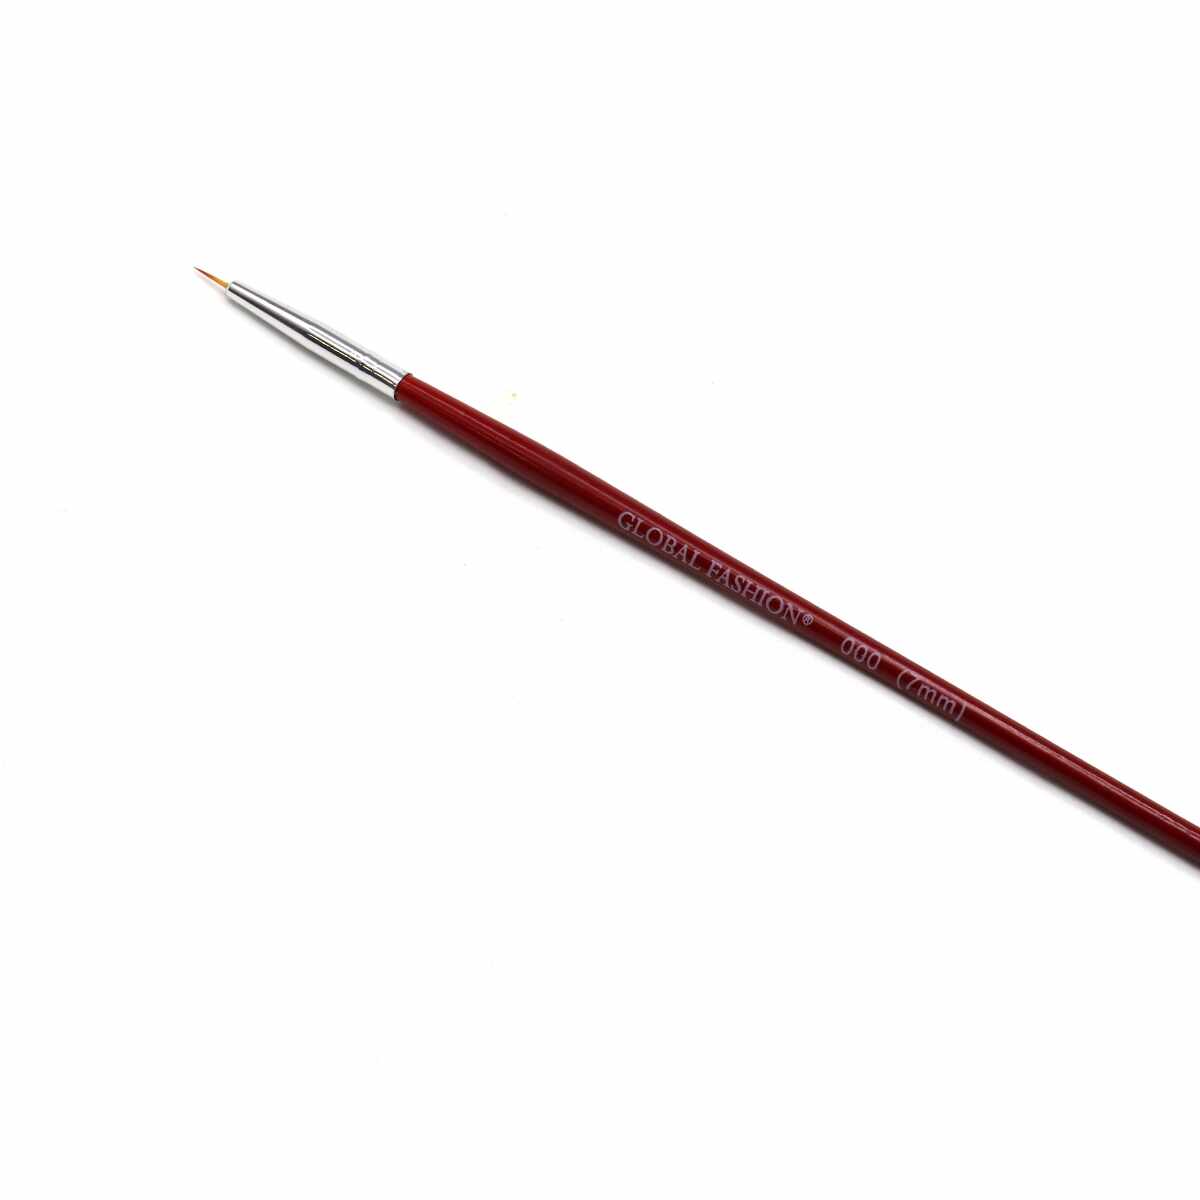 Pensula Unghii subtire pentru Pictura, 000 (7 mm)